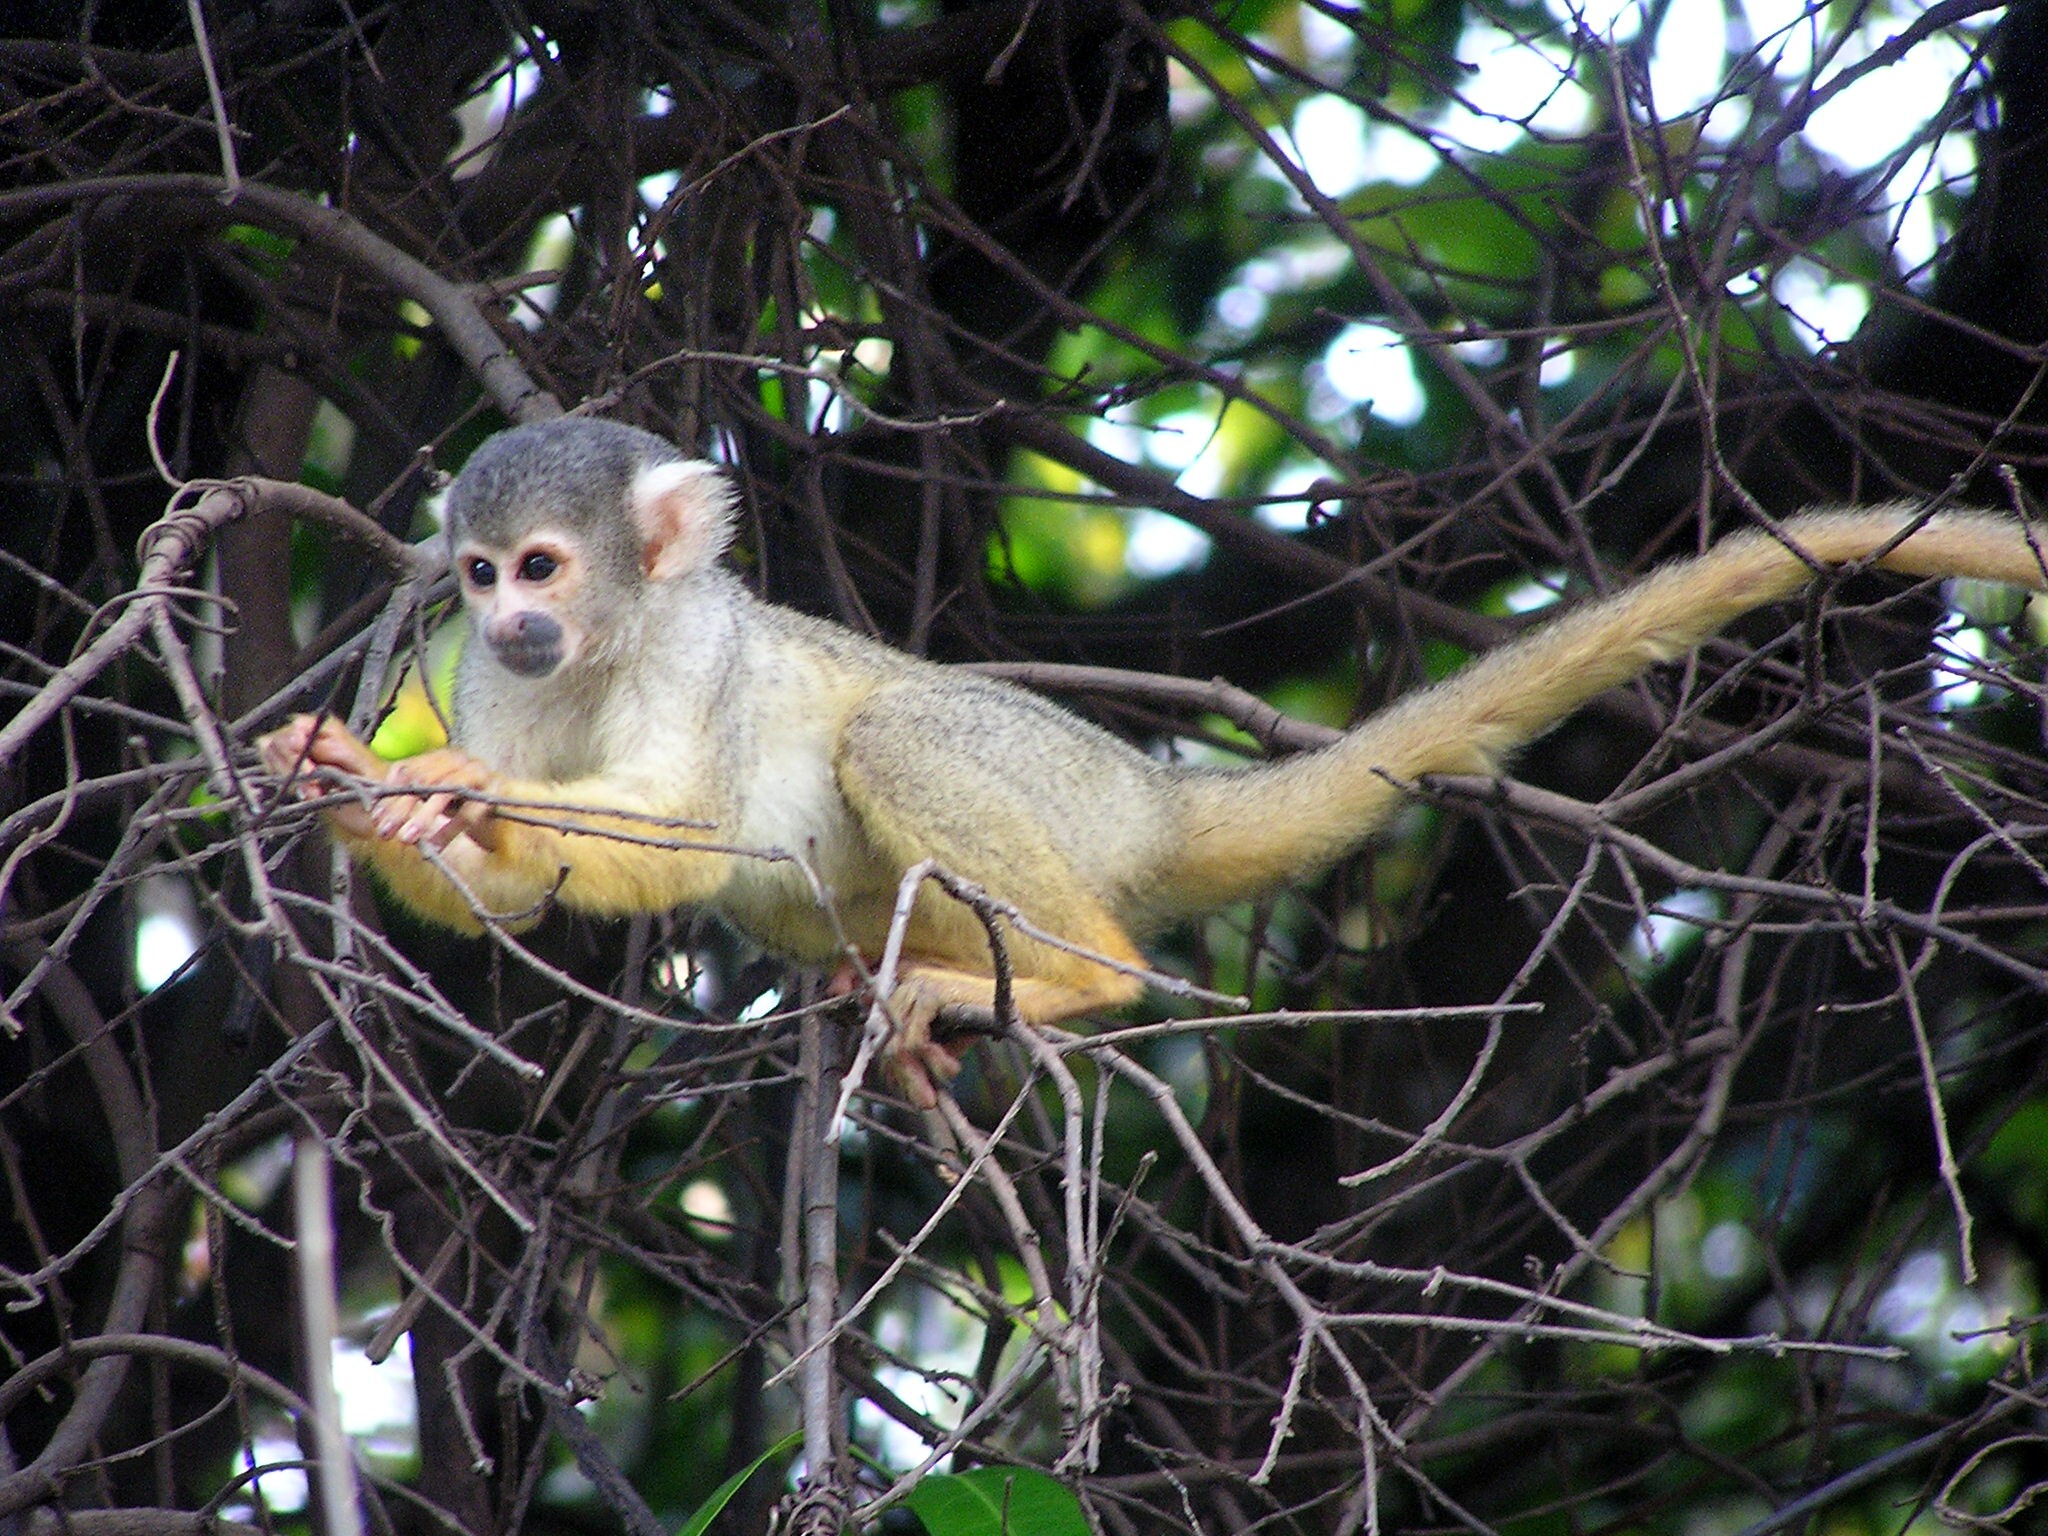 File:Squirrel monkey 2.JPG - Wikimedia Commons